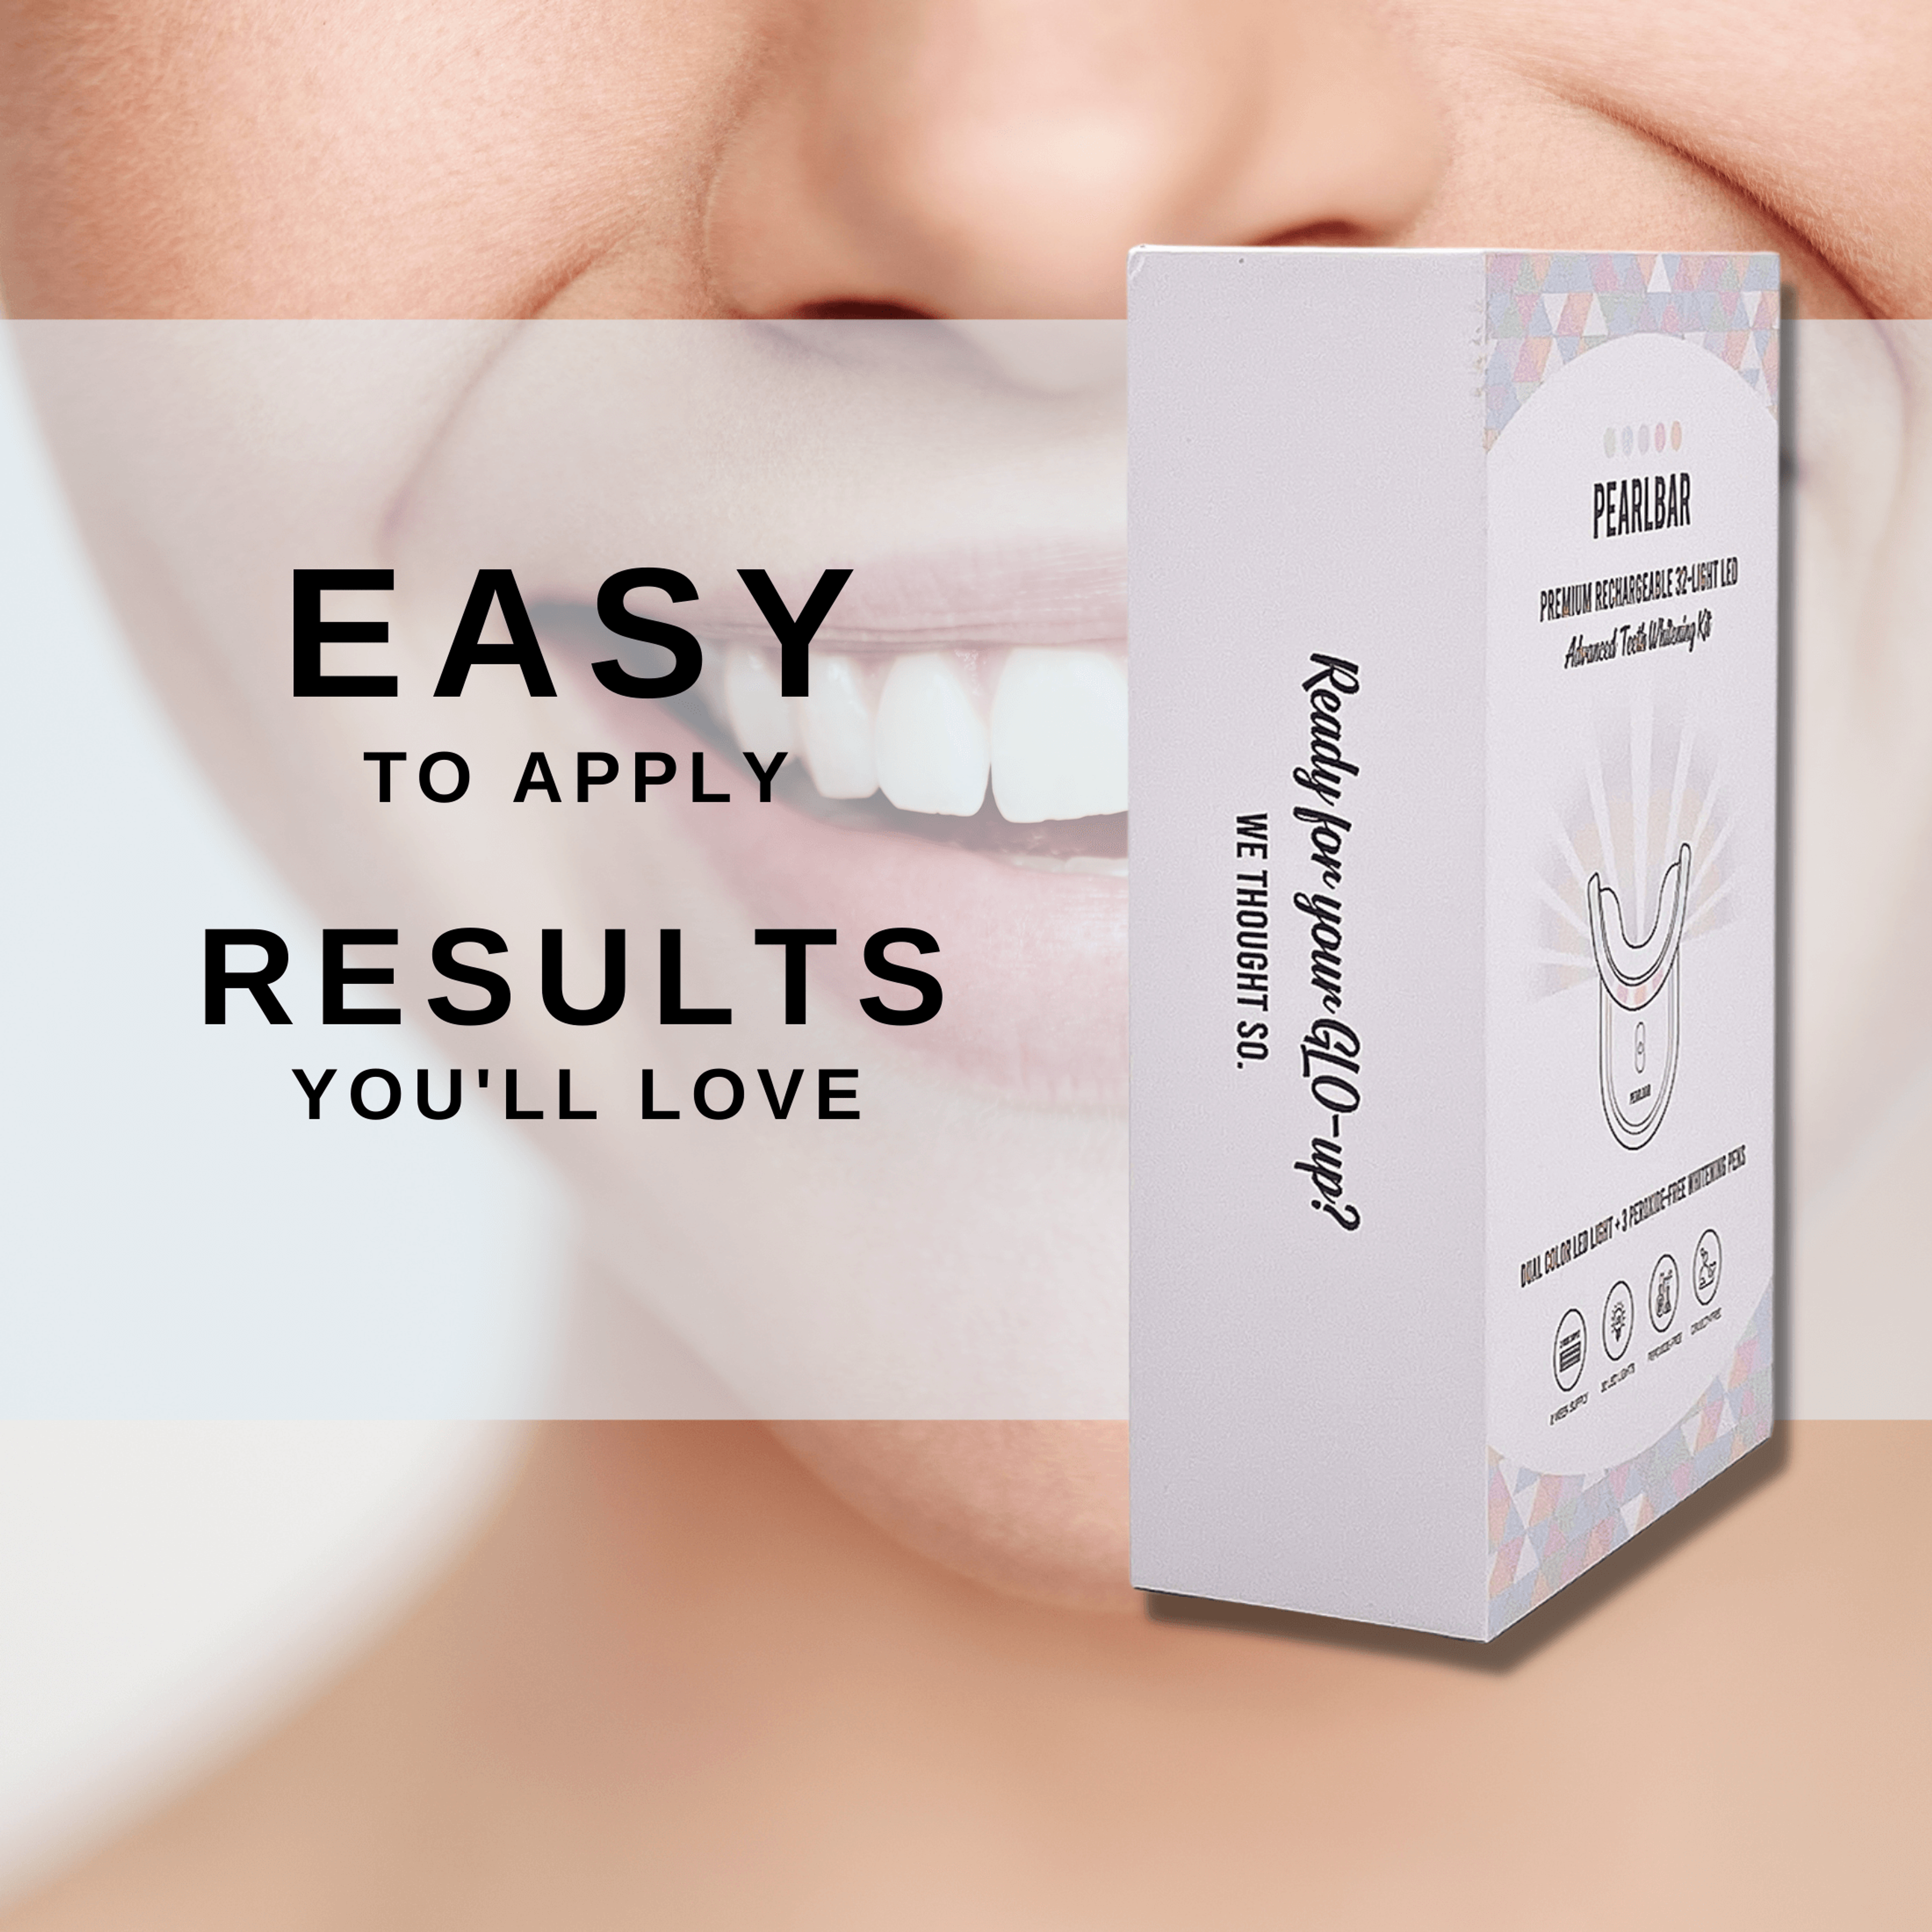 PearlBar Premium 32-Light LED Advanced Teeth Whitening Kit